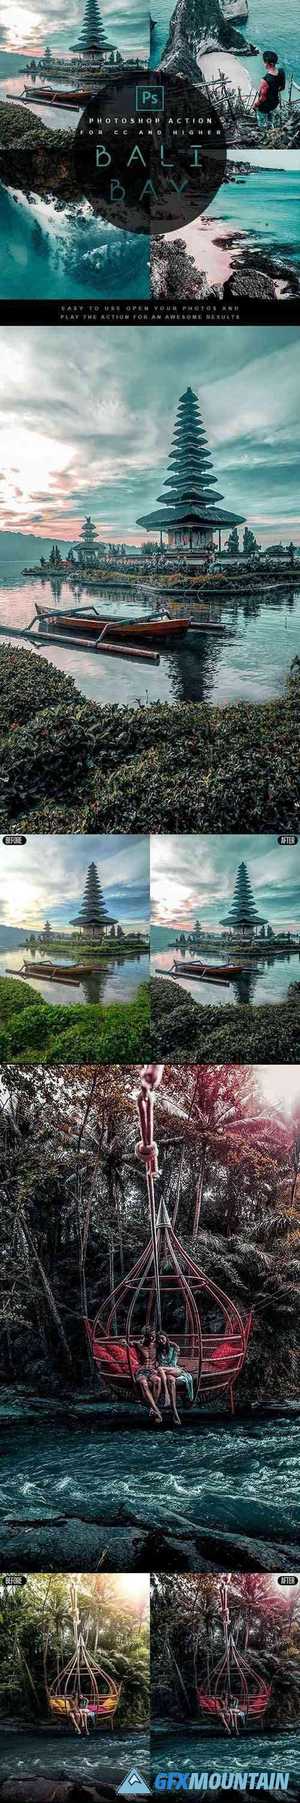 Bali Bay - Photoshop Action 28295208